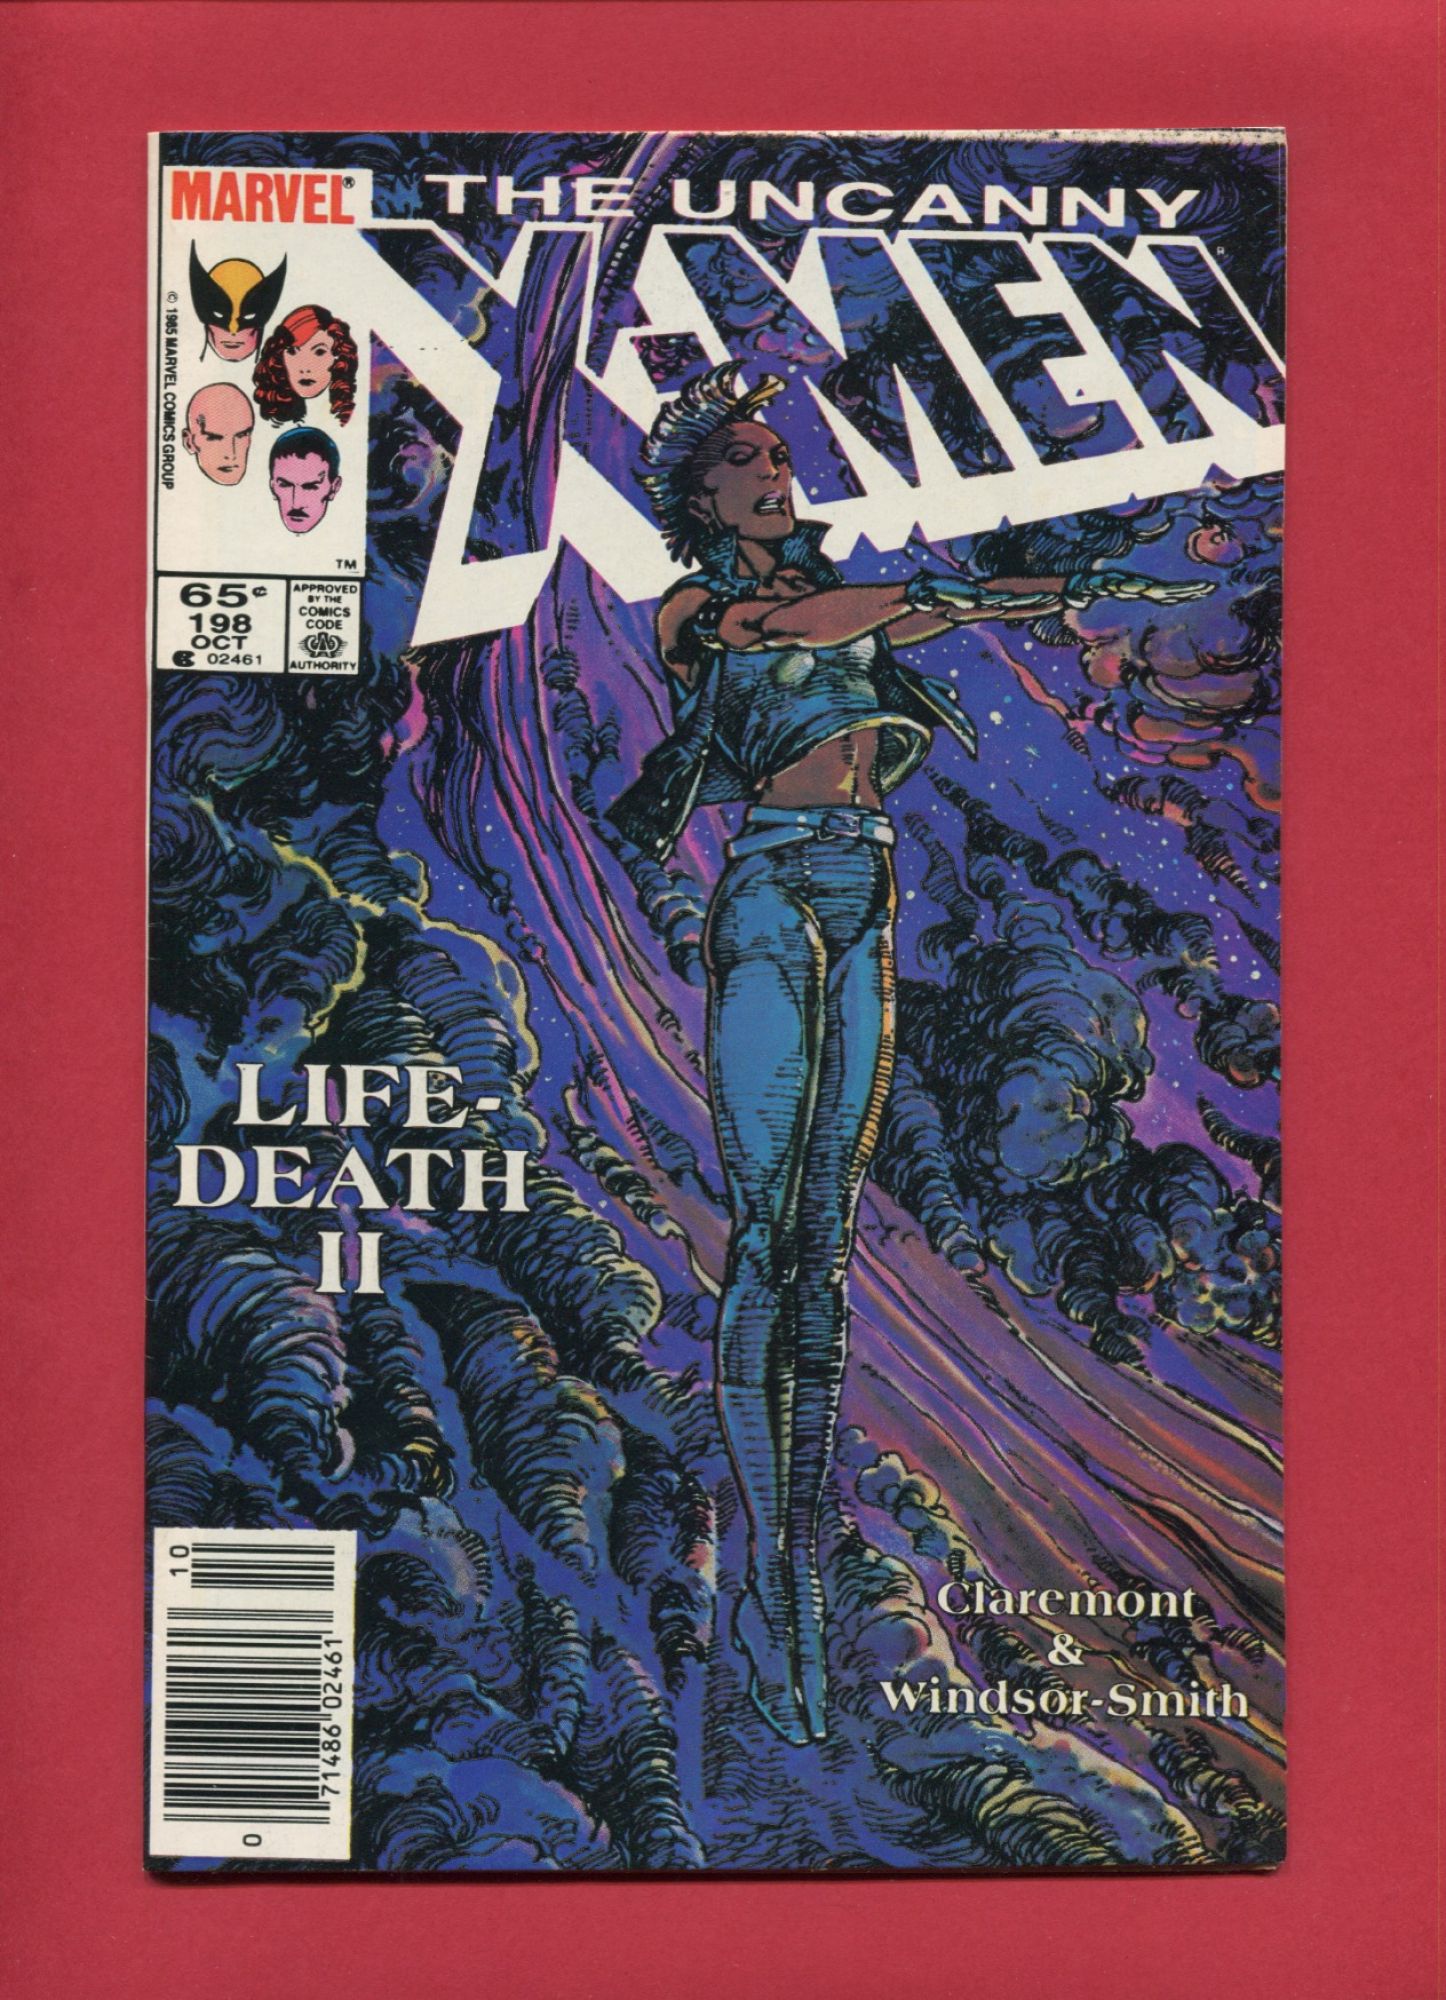 Uncanny X-Men #198, Oct 1985, 4.5 VG+